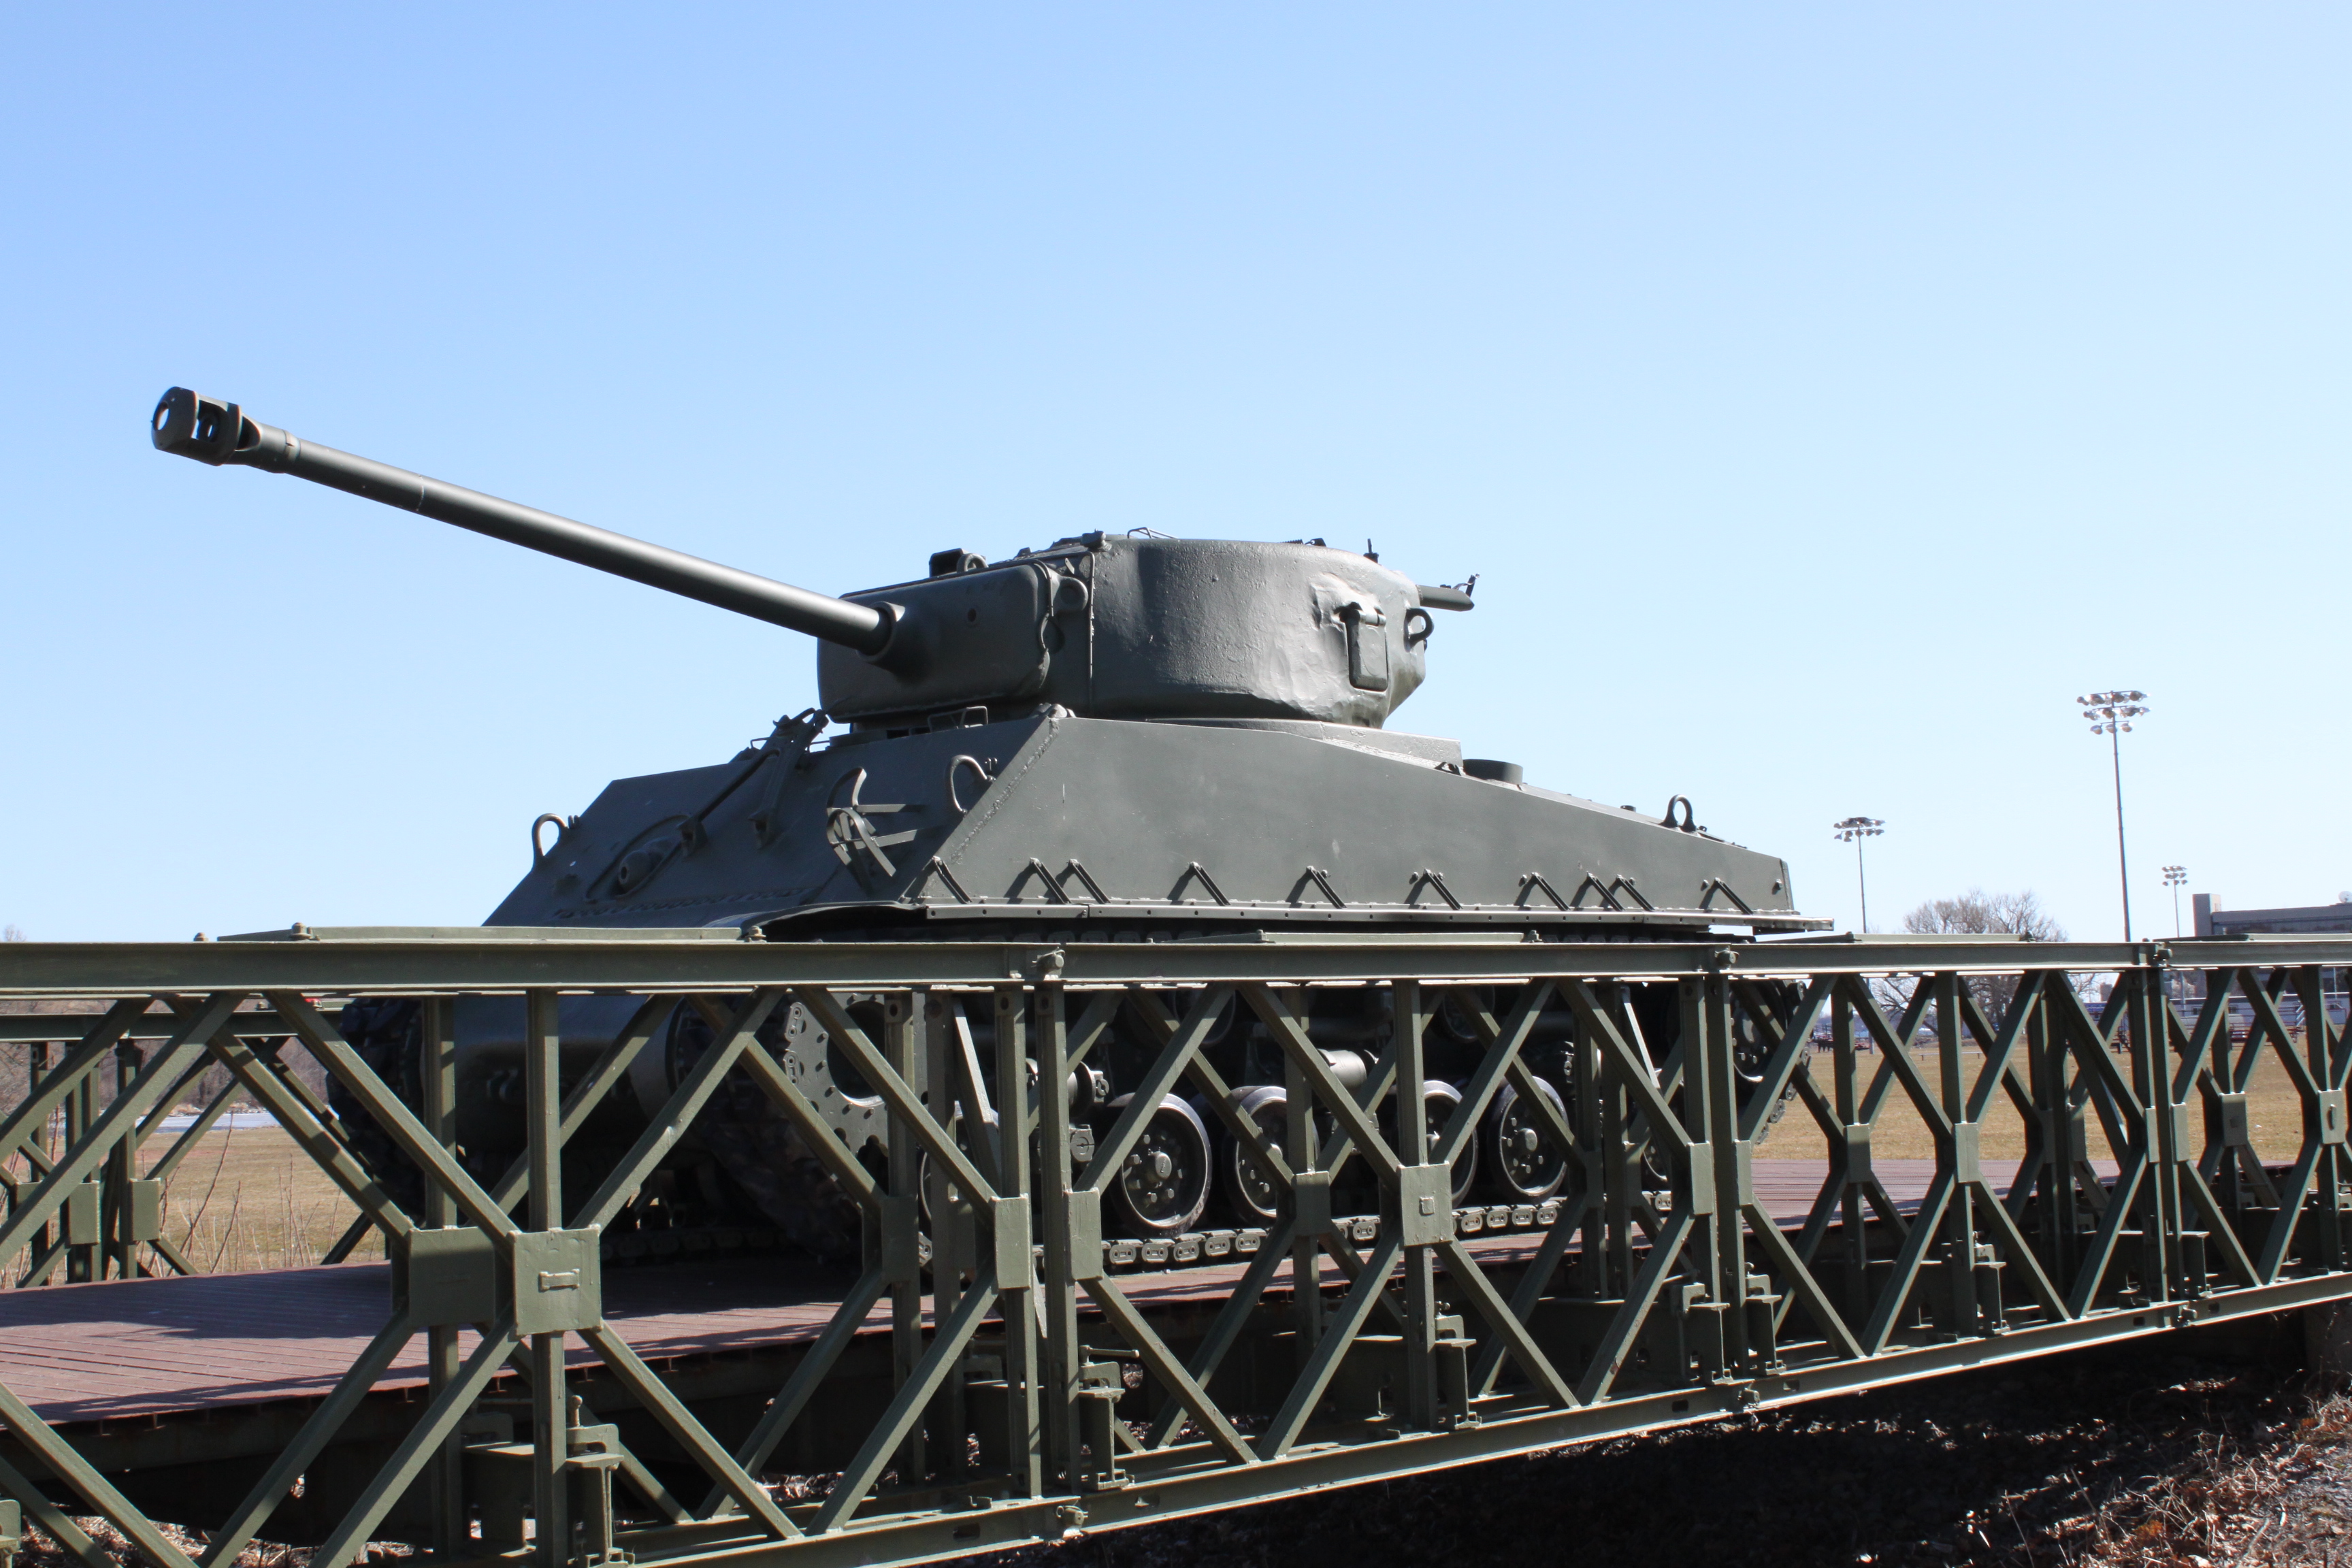 Canadian Sherman Tank